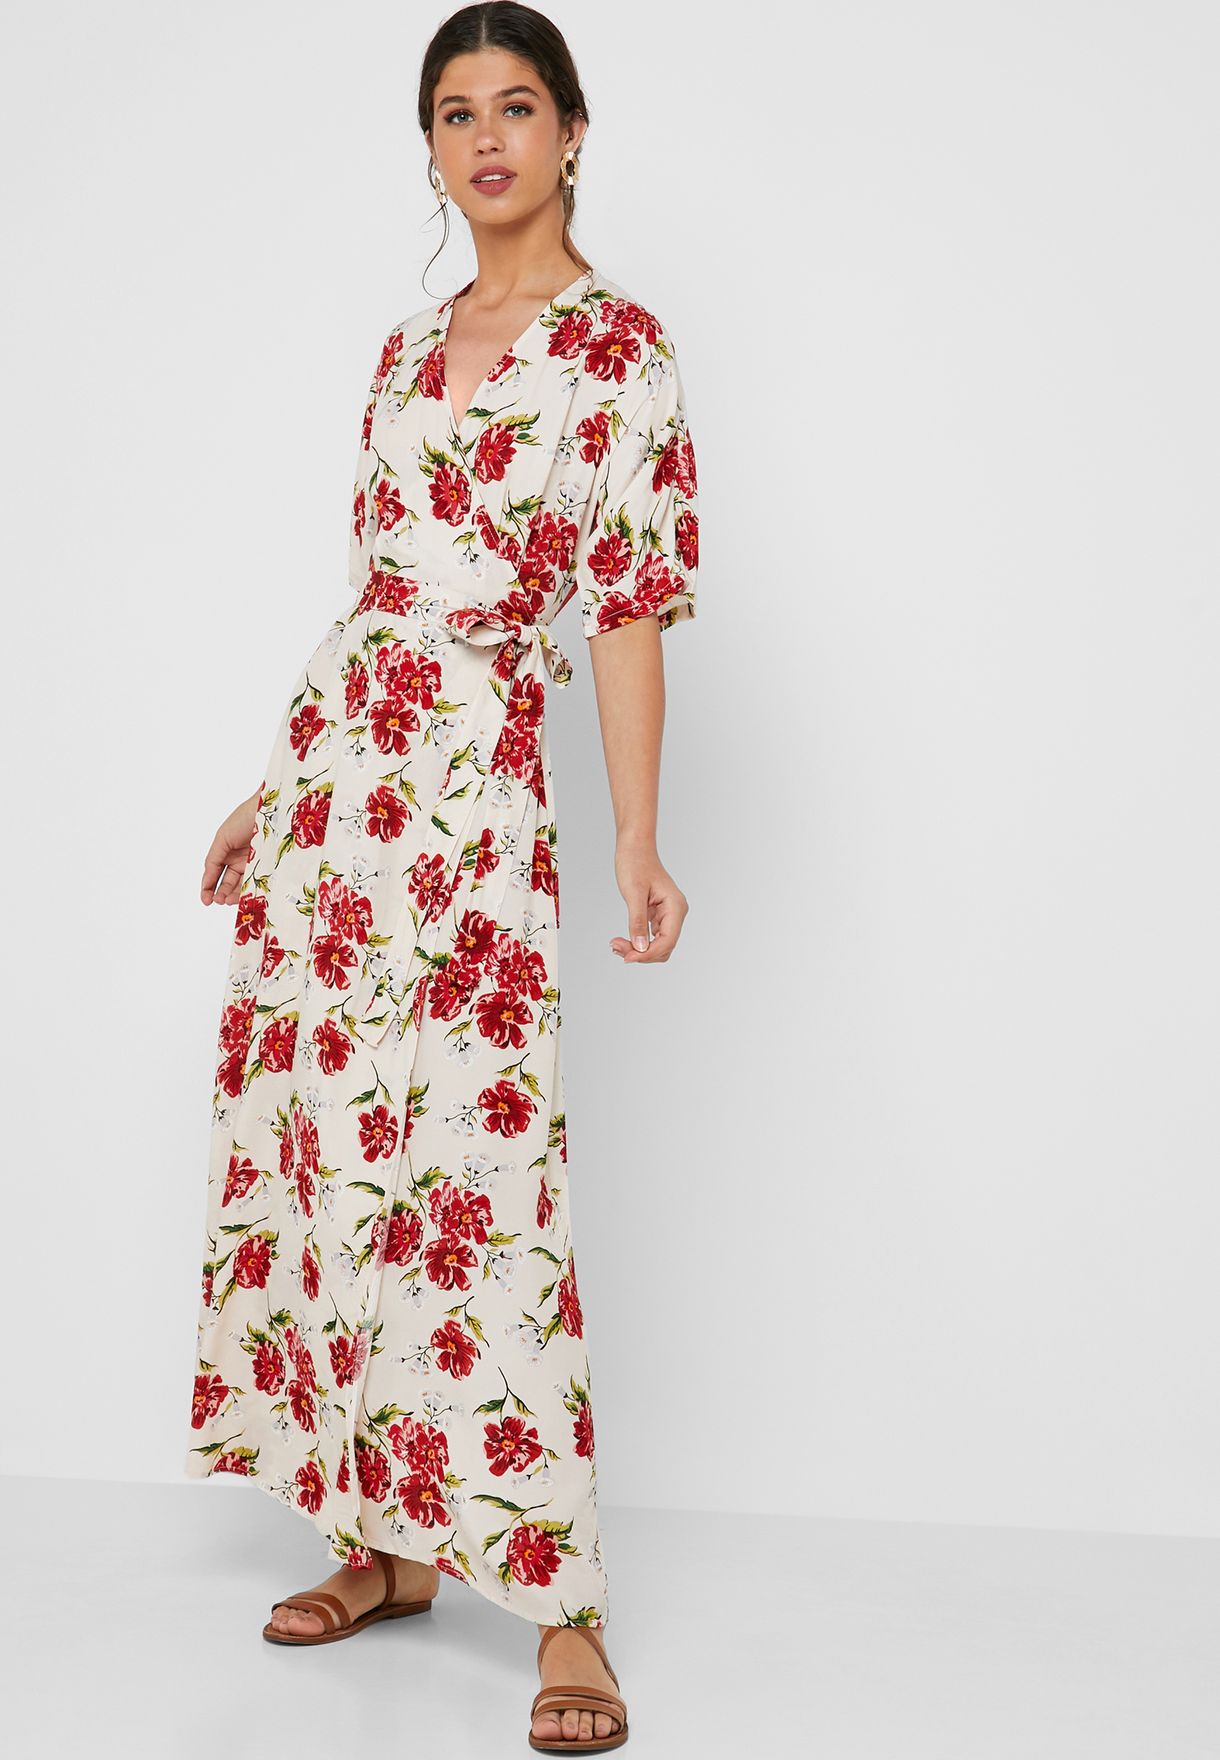 Buy Mango prints Floral Print Dress for ...